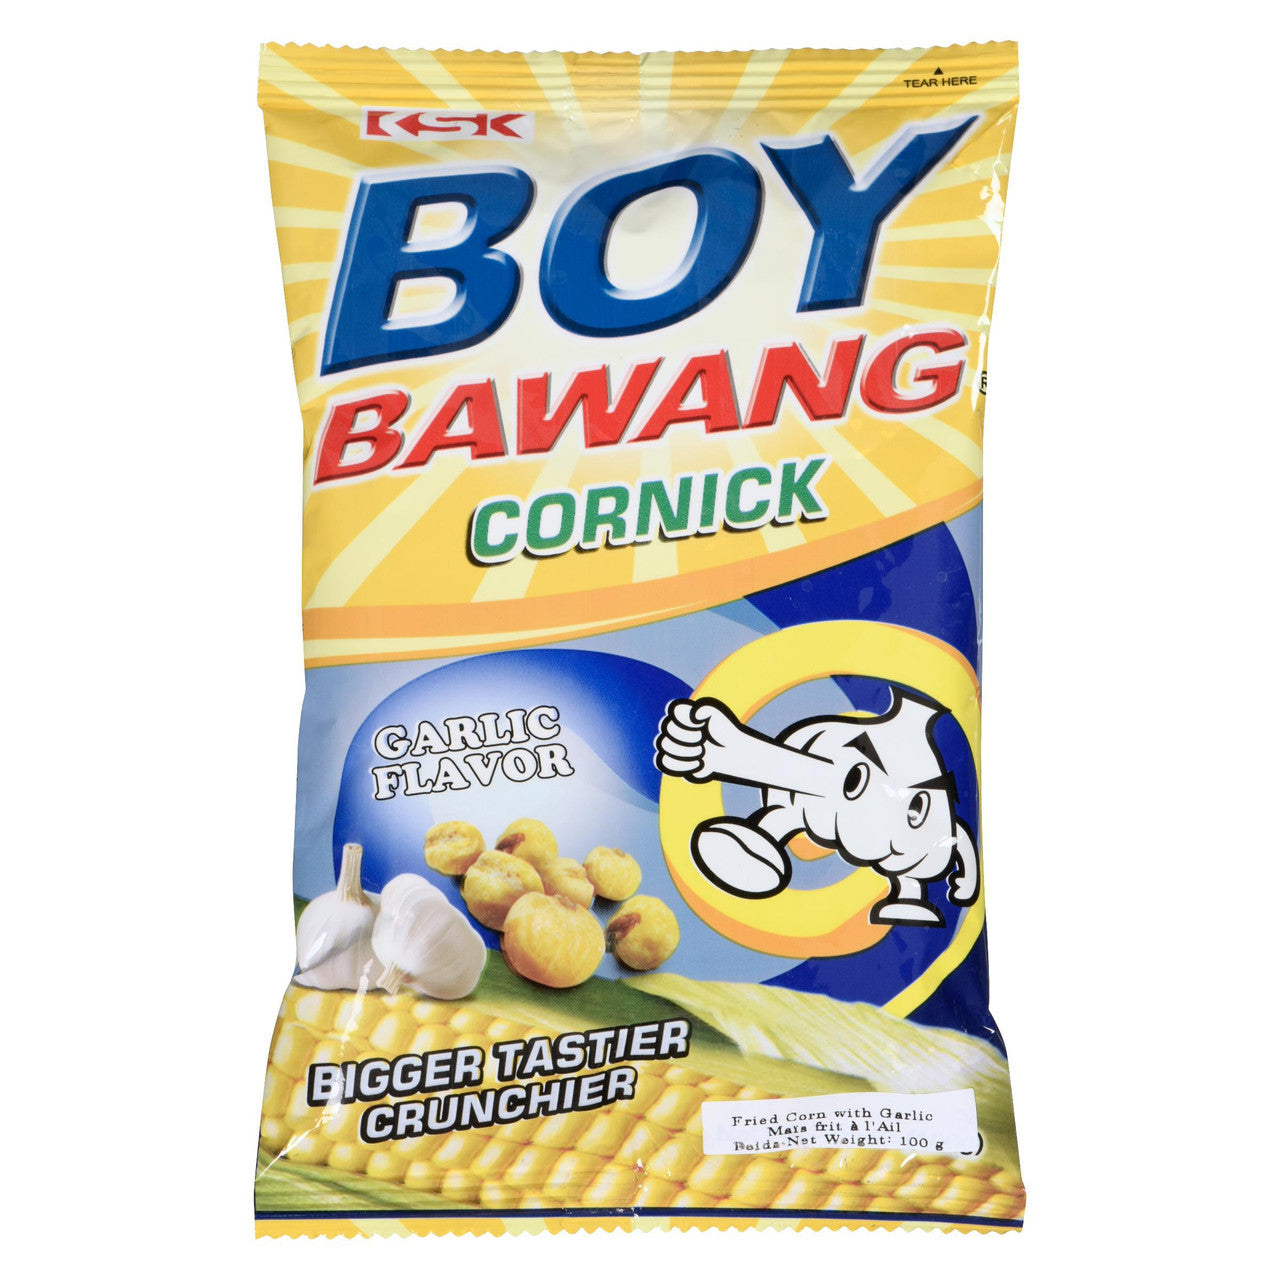 Boy Bawang Cornick Garlic Flavored Fried Corn, 100g/3.5 oz. Bag {Imported from Canada}